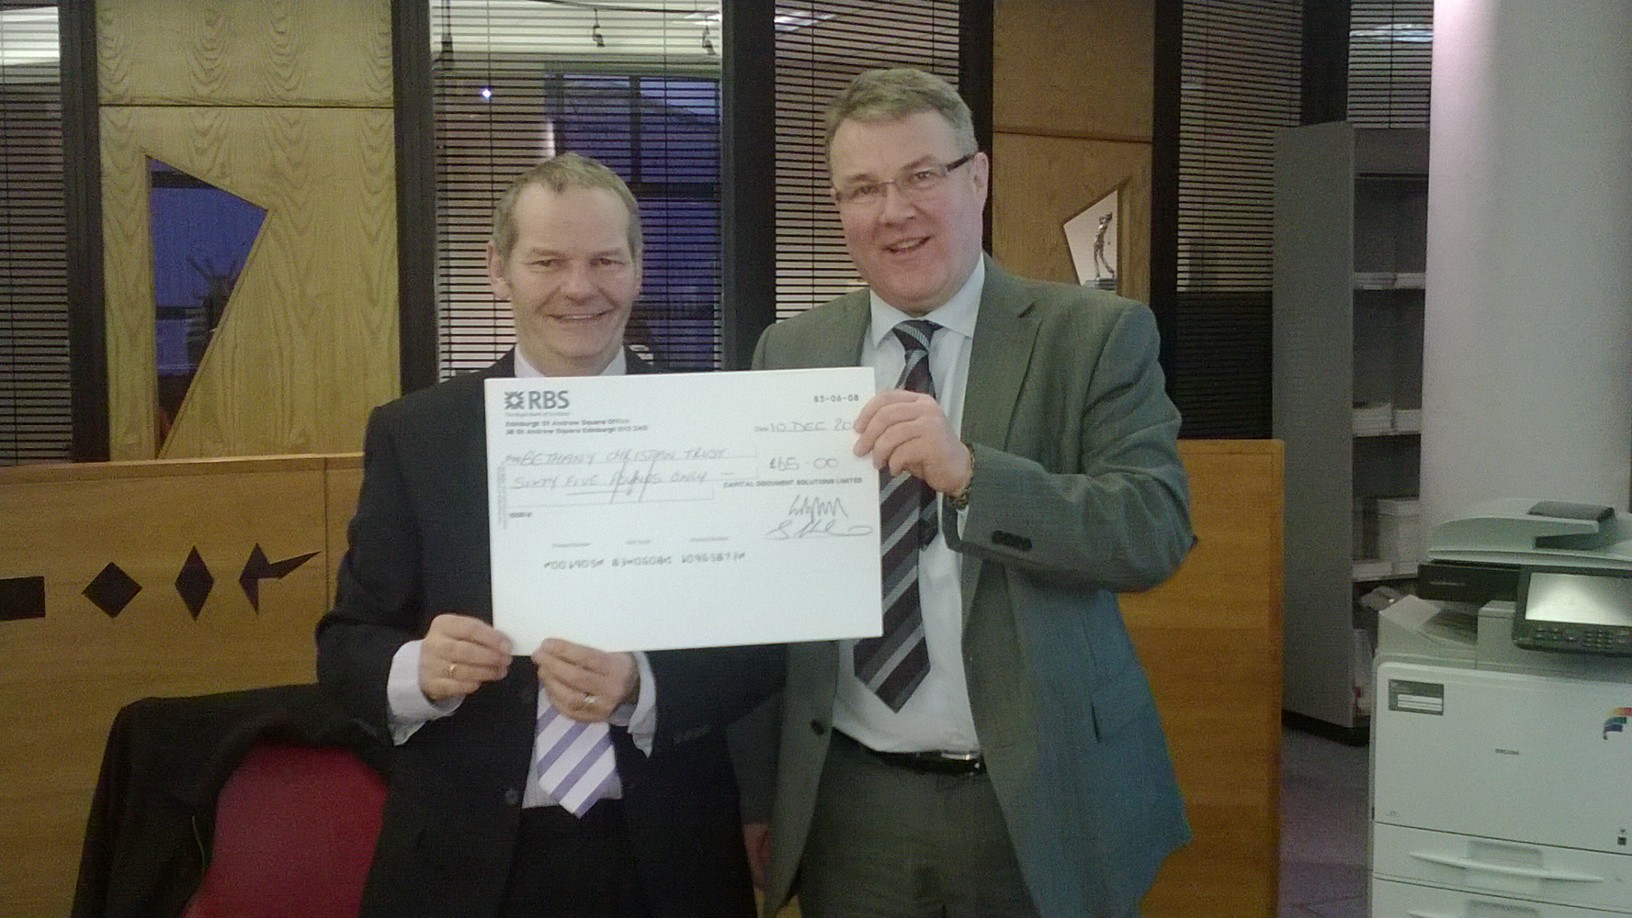 Ross Whailin of Bethany Christian Trust receives a donation from Mark Harvie of Capital